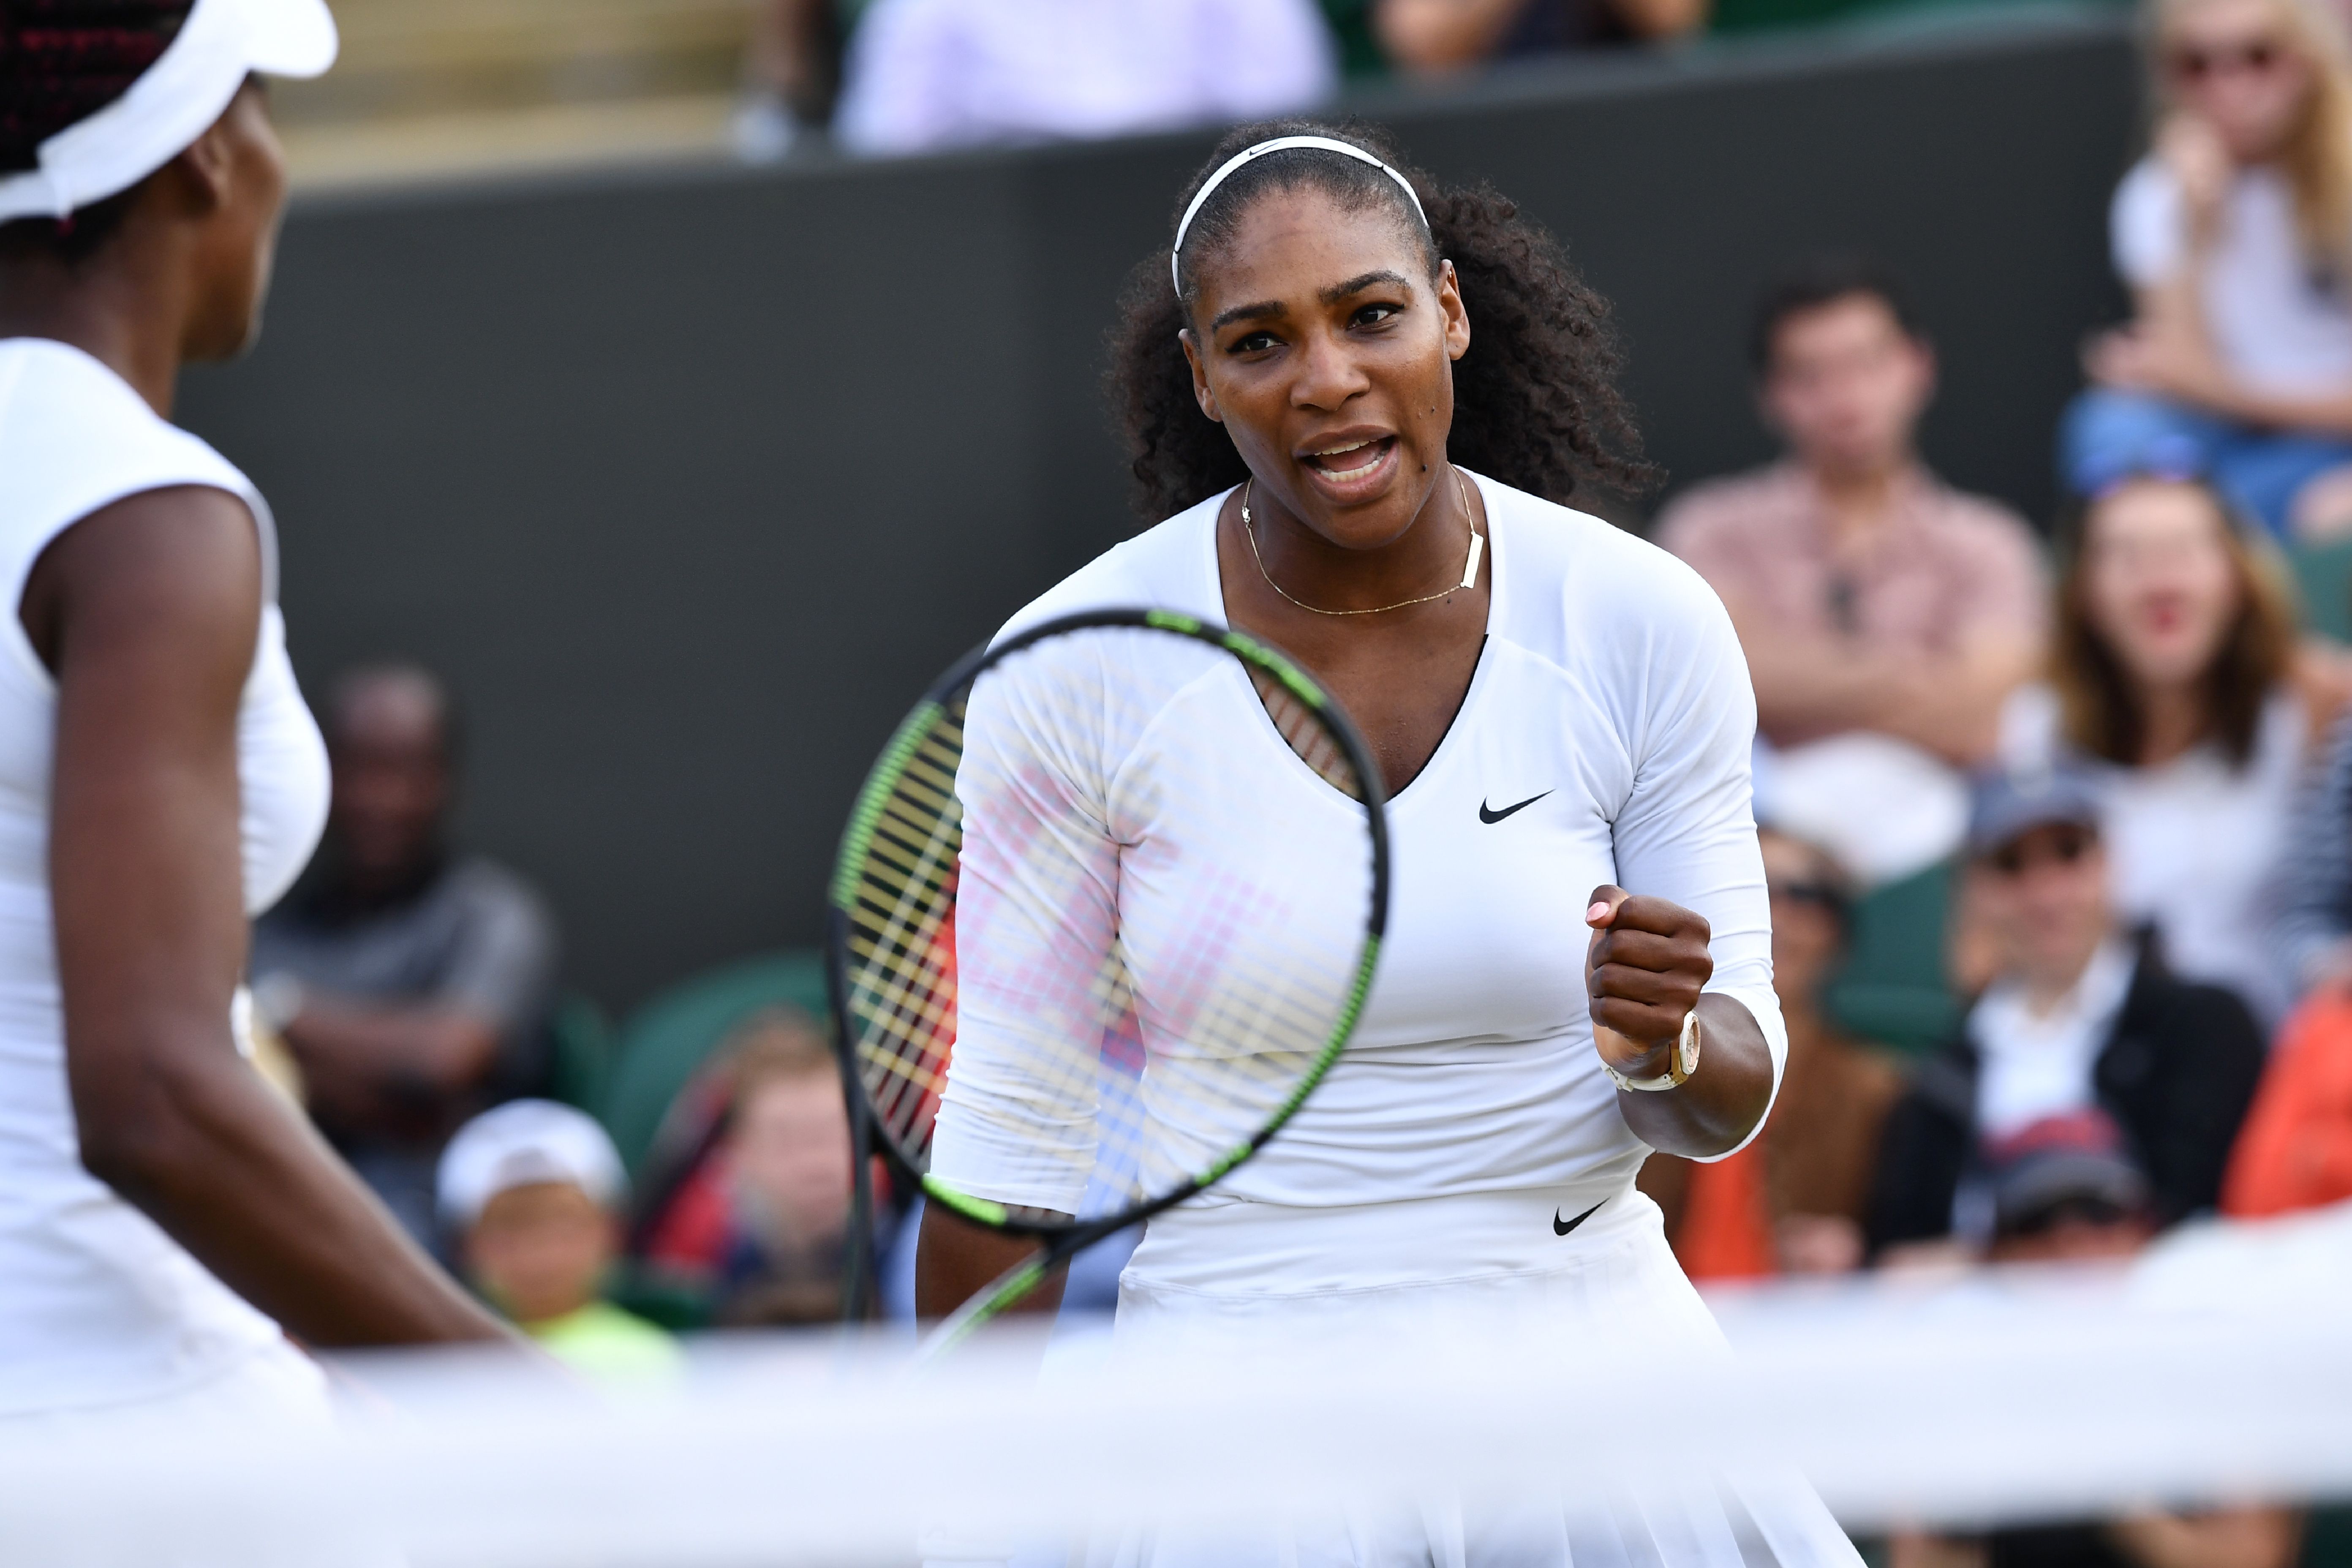 Tennis: Equal prize money debate irks Serena